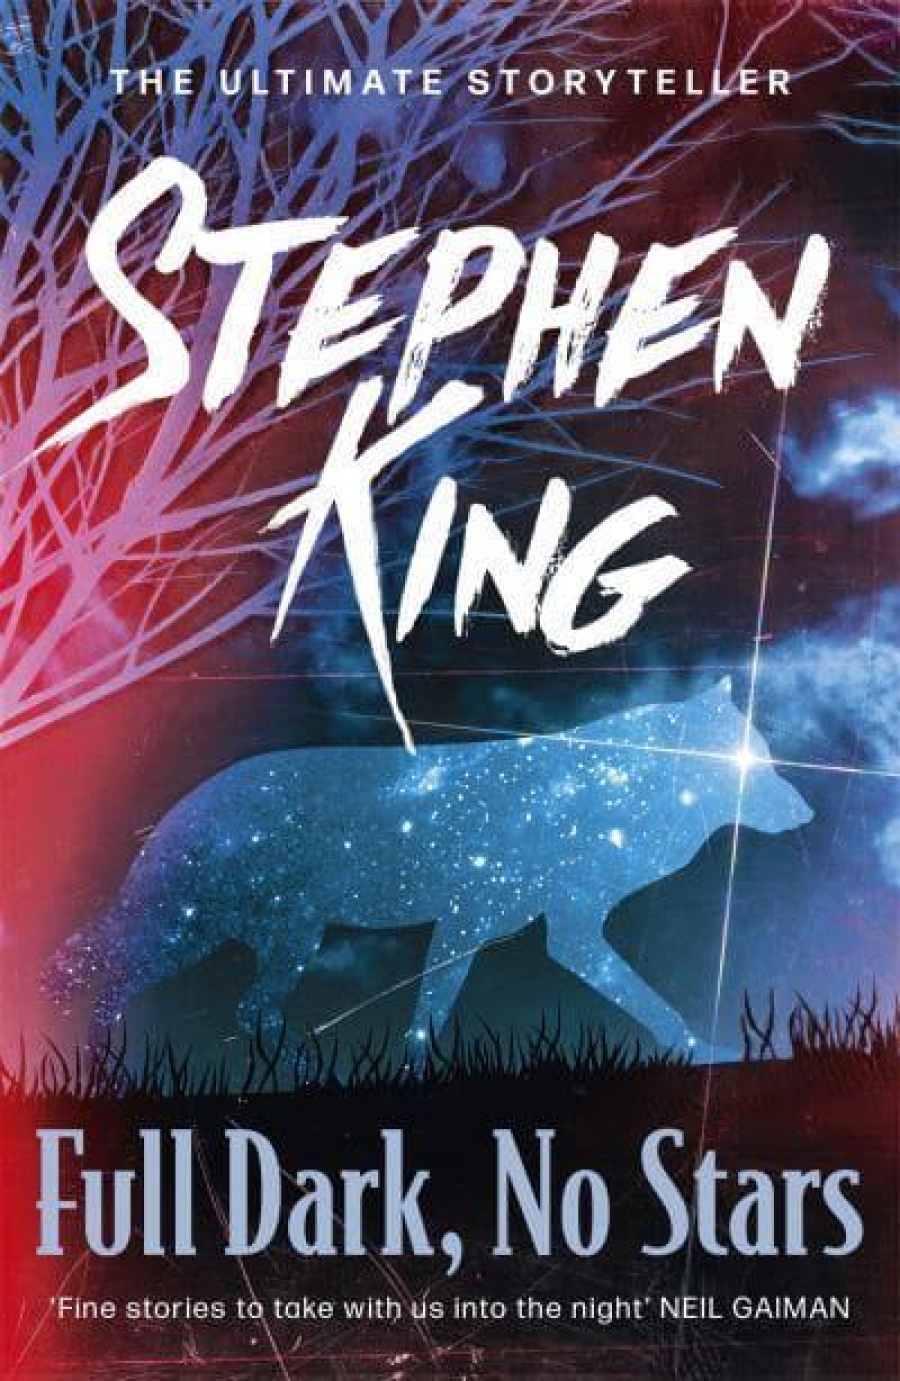 King, Stephen Full Dark, No Stars 